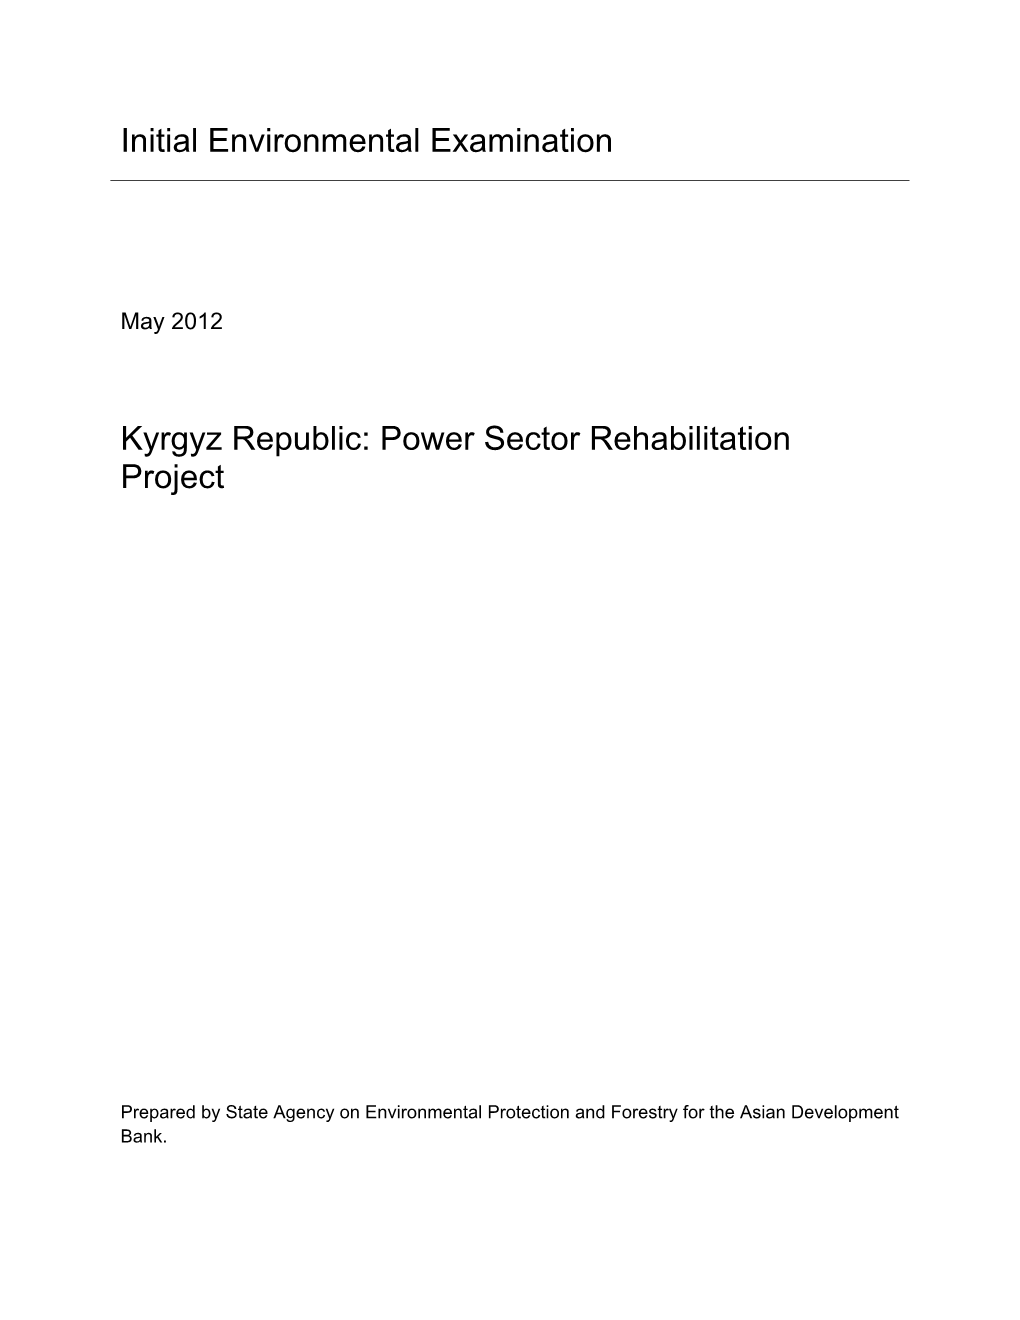 Kyrgyz Republic: Power Sector Rehabilitation Project